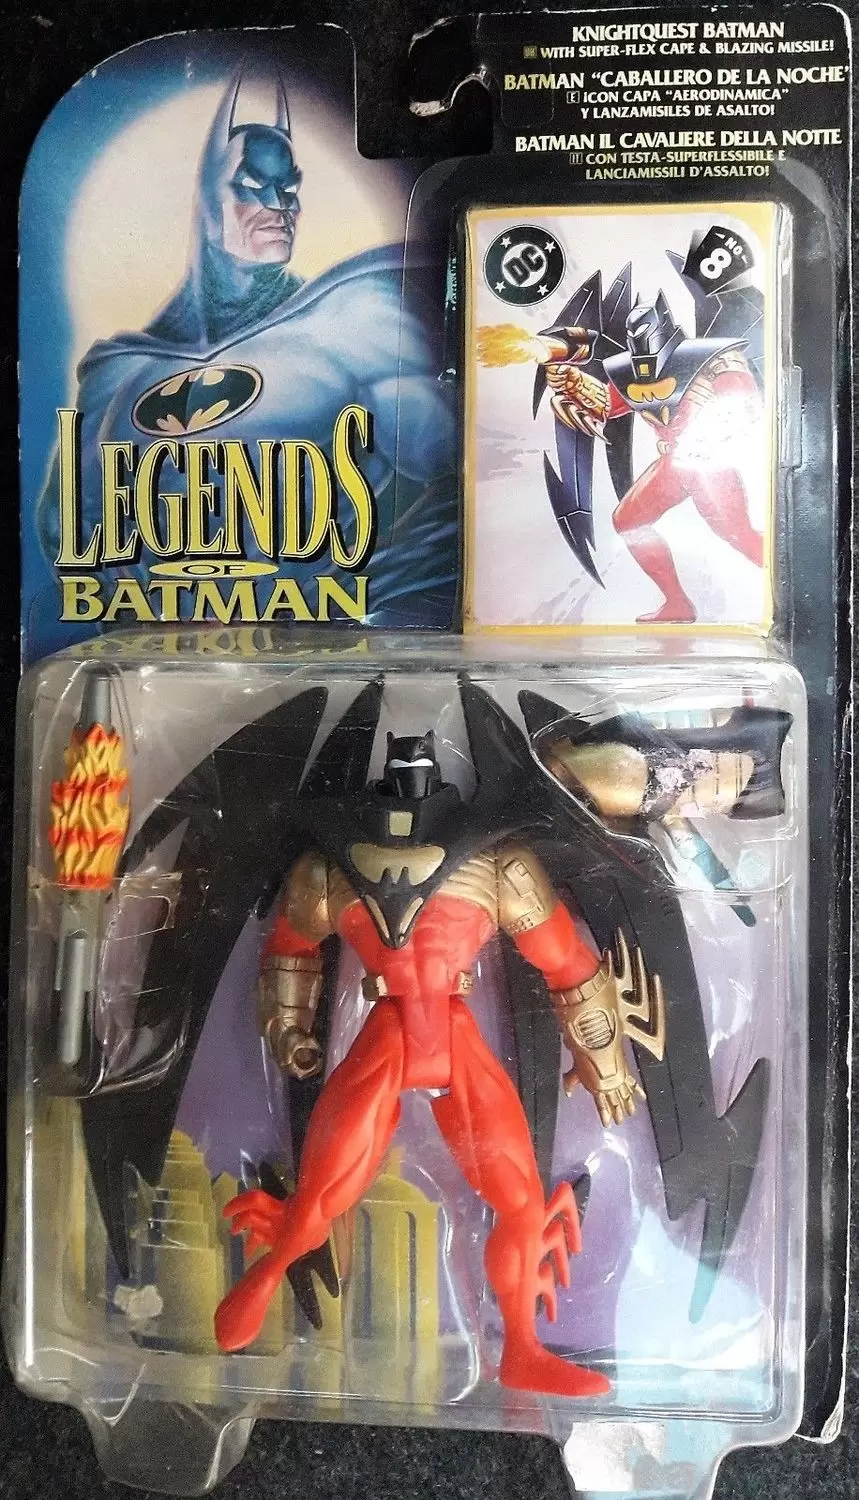 Legends of the Batman - Knighquest Batman